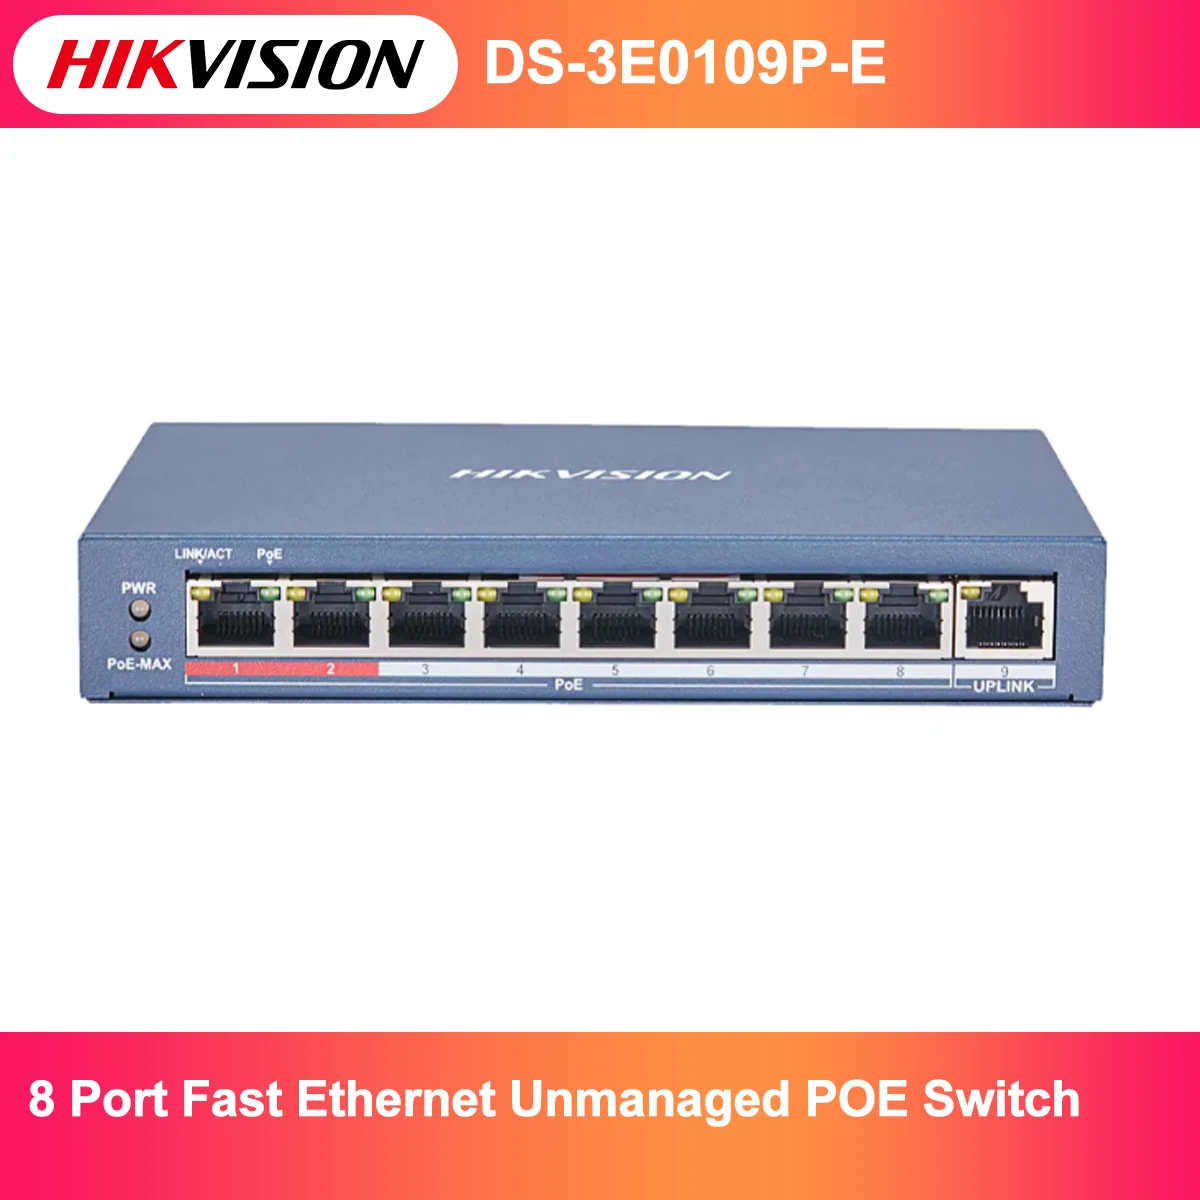 

Original Hikvision Up to 300 m Long Range 8 Port Fast Ethernet Unmanaged POE Switch DS-3E0109P-E